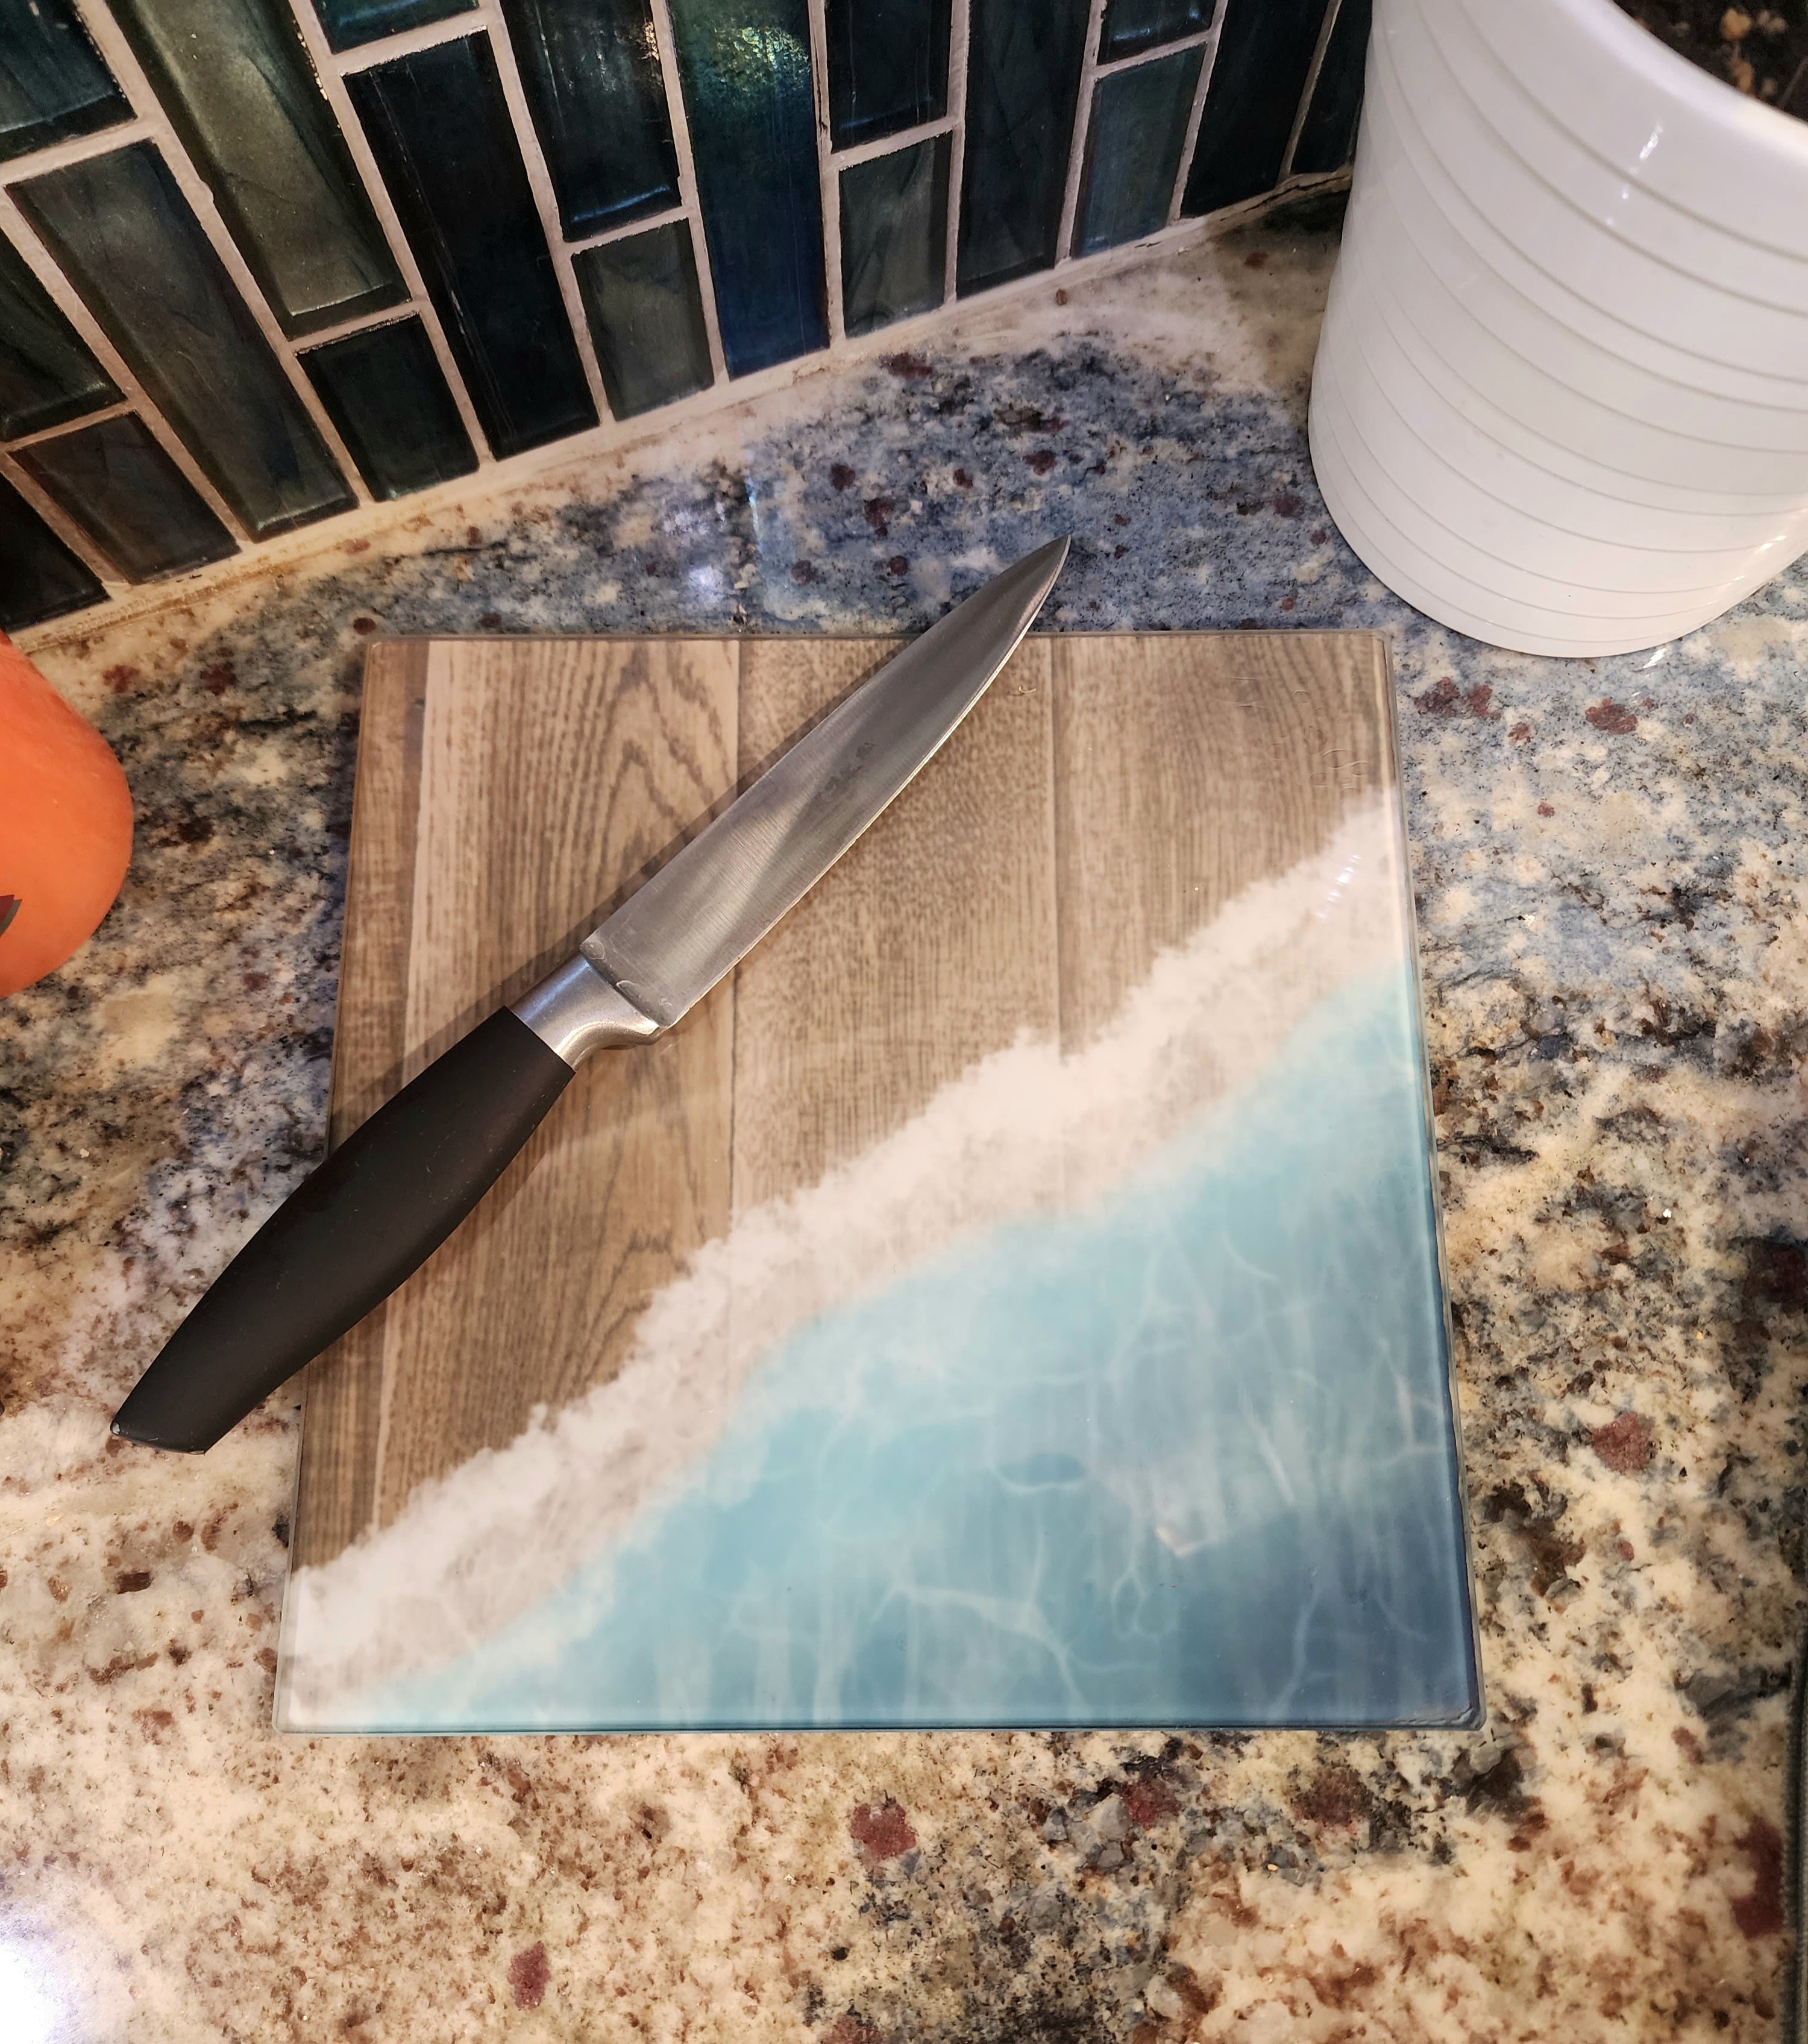 Glass Cutting Boards